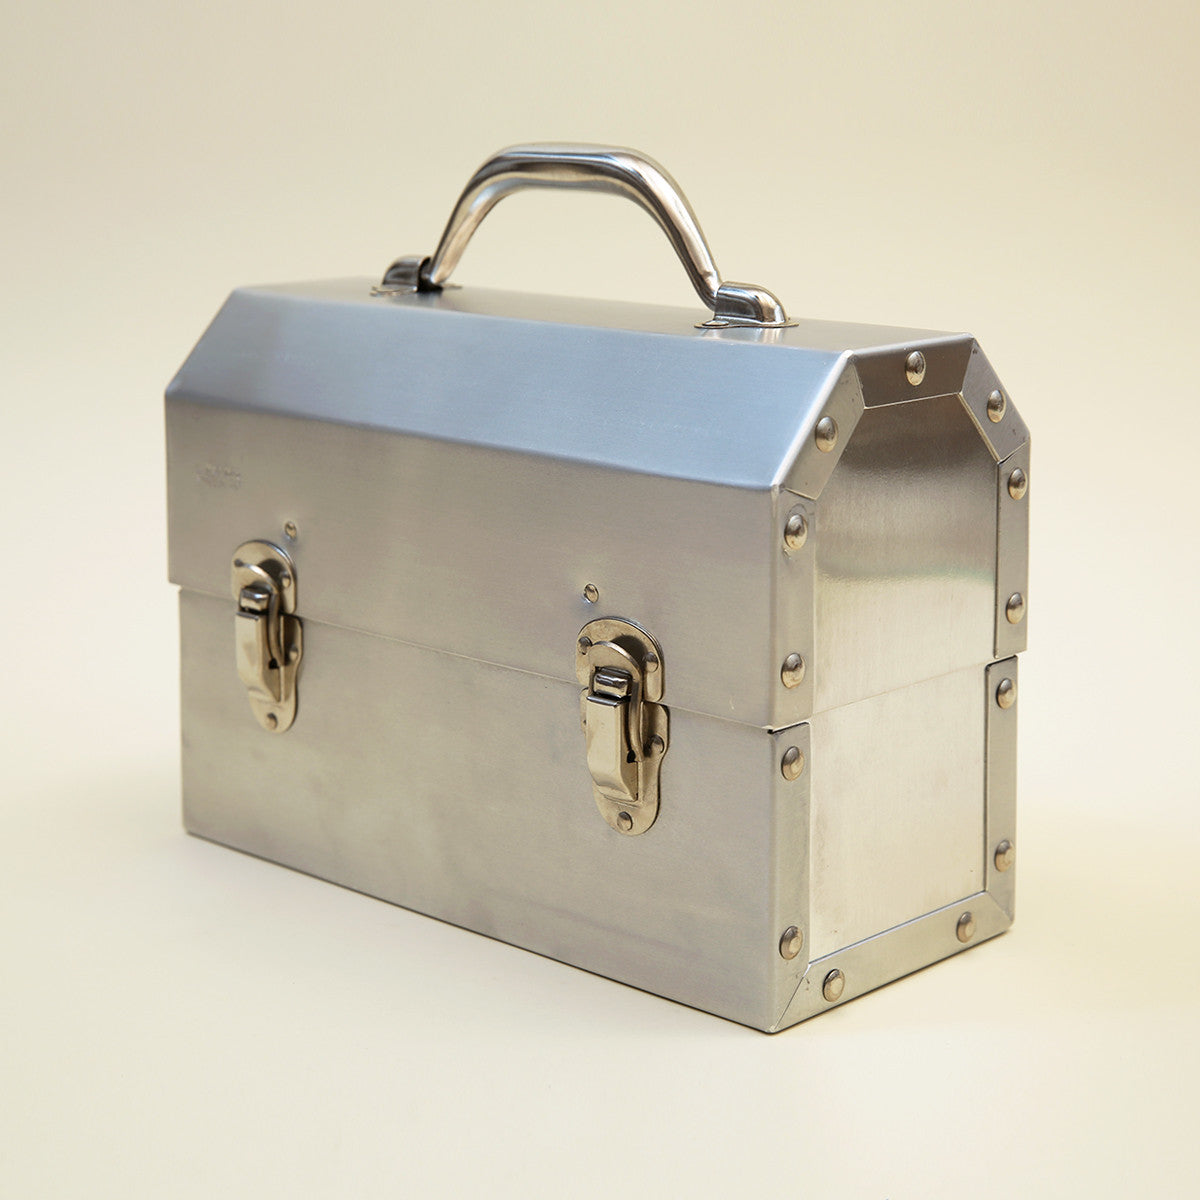 Vintage Industrial Aluminum Lunch Box 